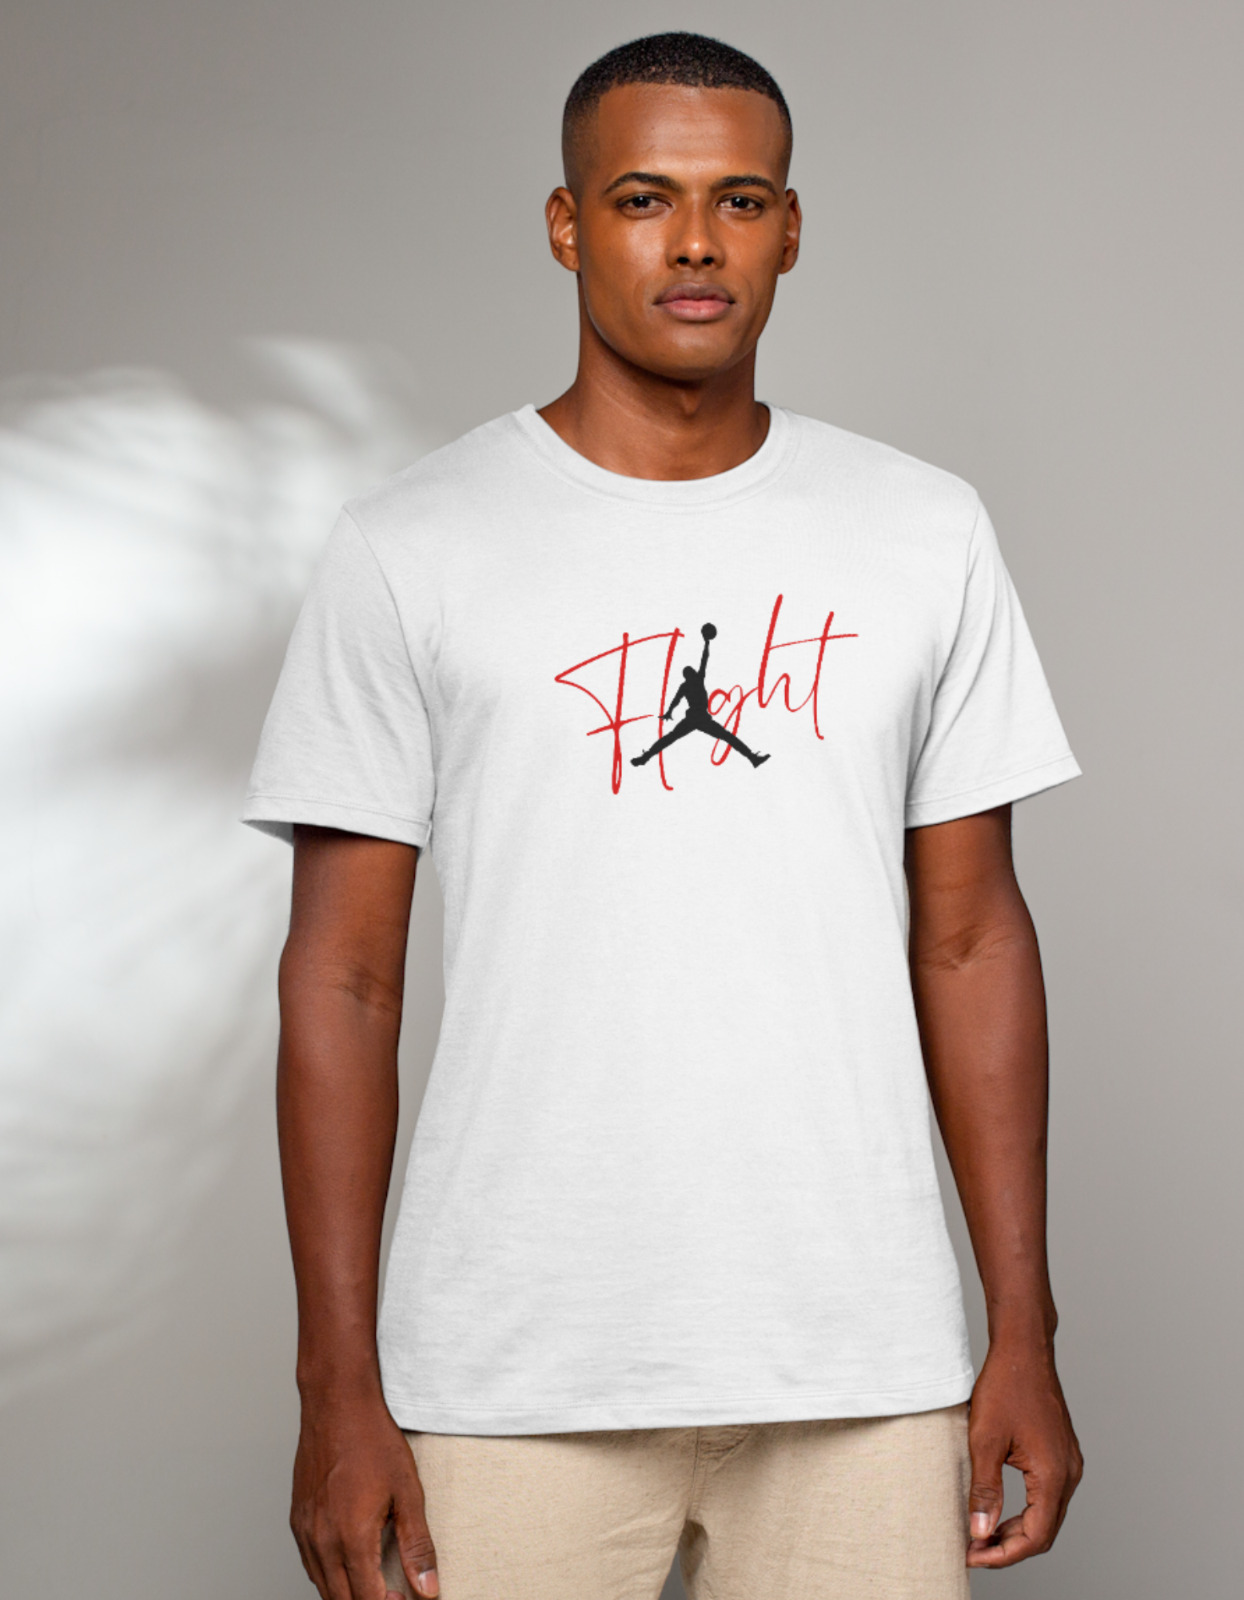 Awesome Flight Tee Shirt Jordan Logo Shirt To Match Air Jordan Shoes, Flight Red Tshirt on eBay